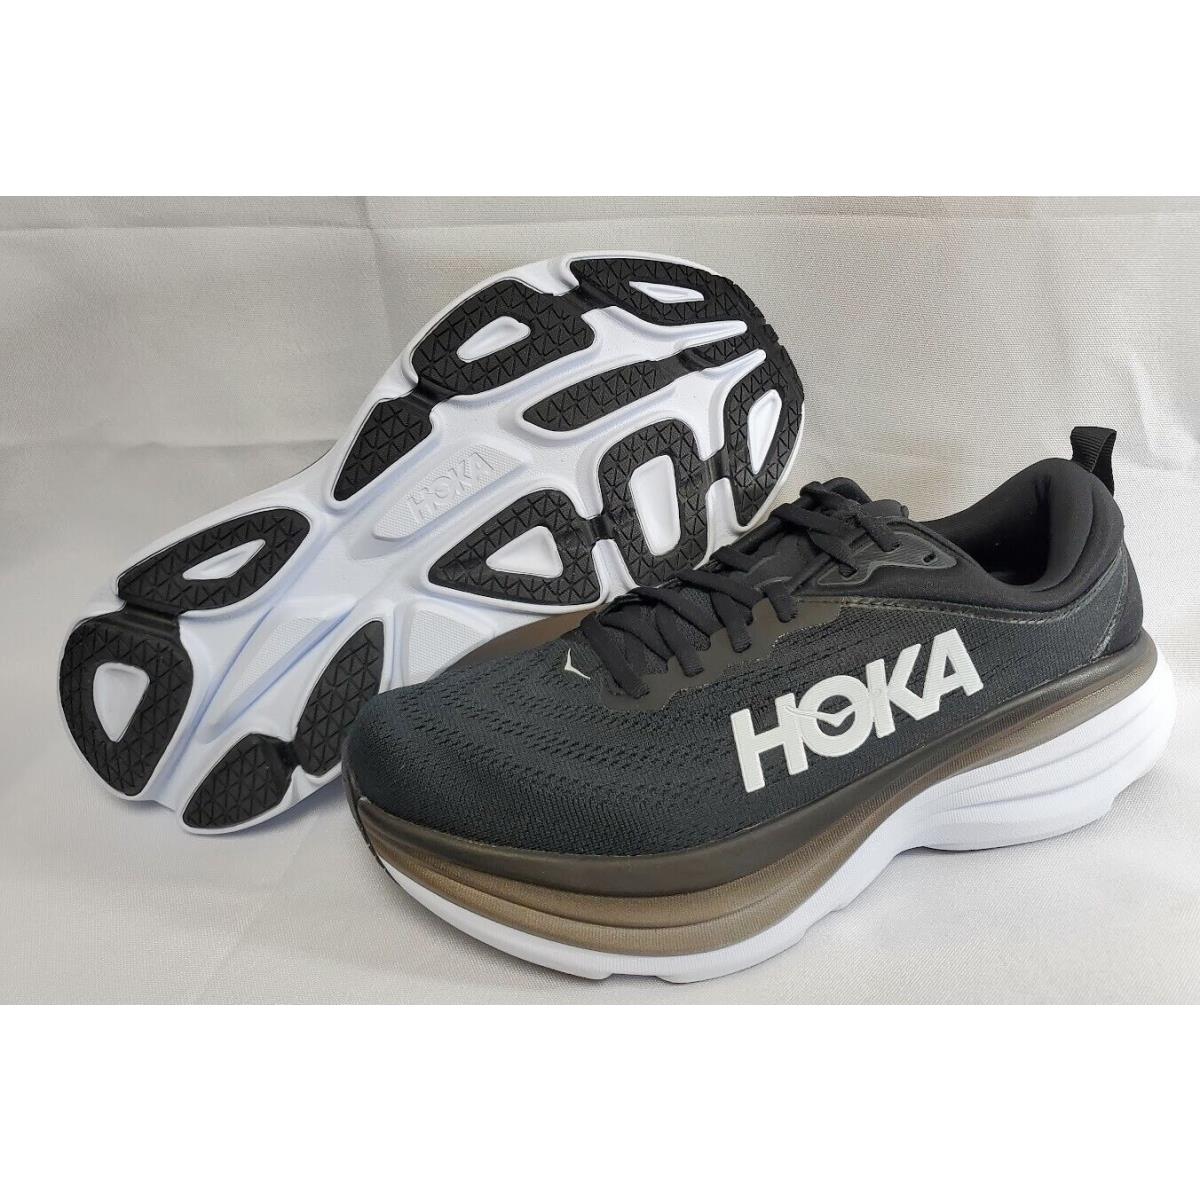 Womens Hoka One One Bondi 8 1127952 Bwht Black White Running Sneakers Shoes